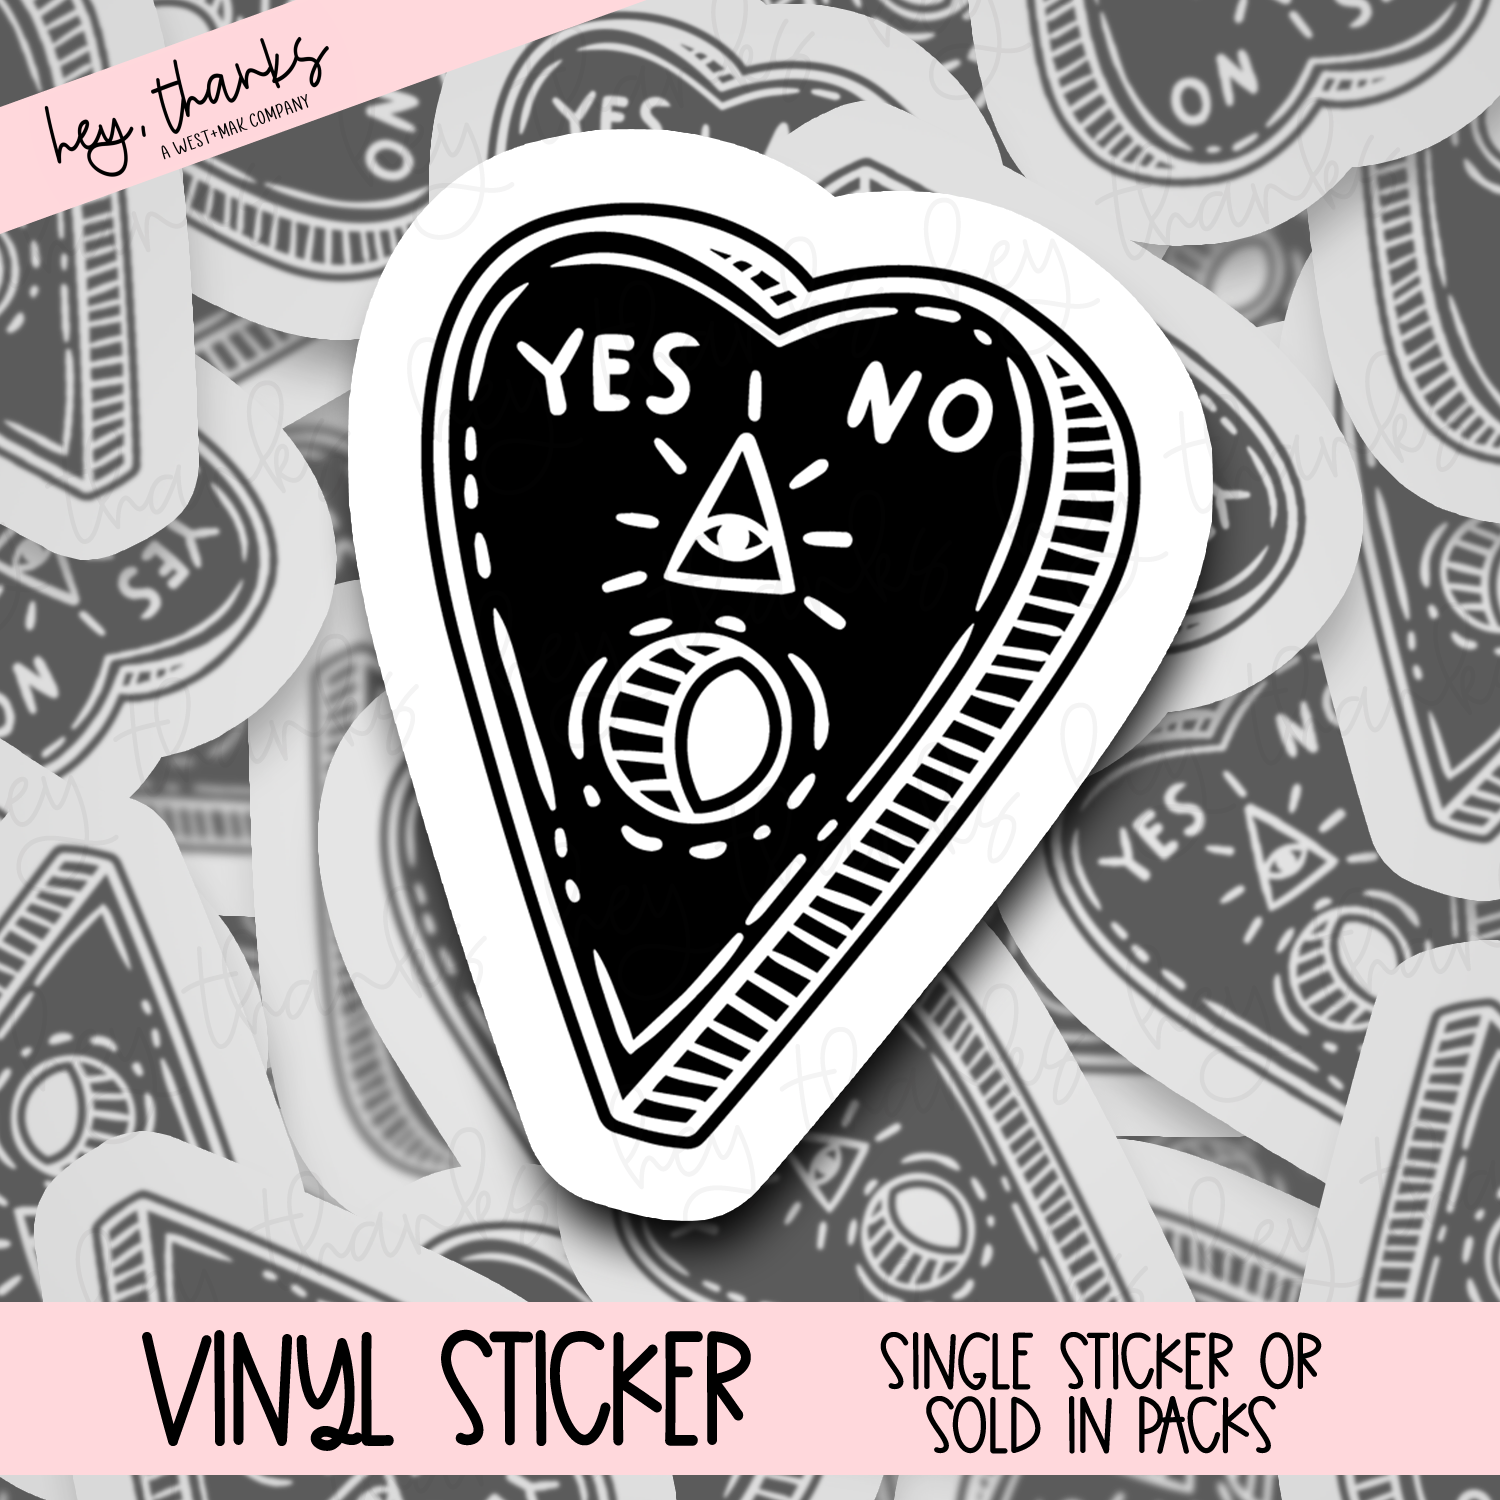 Yes or No - Vinyl Sticker